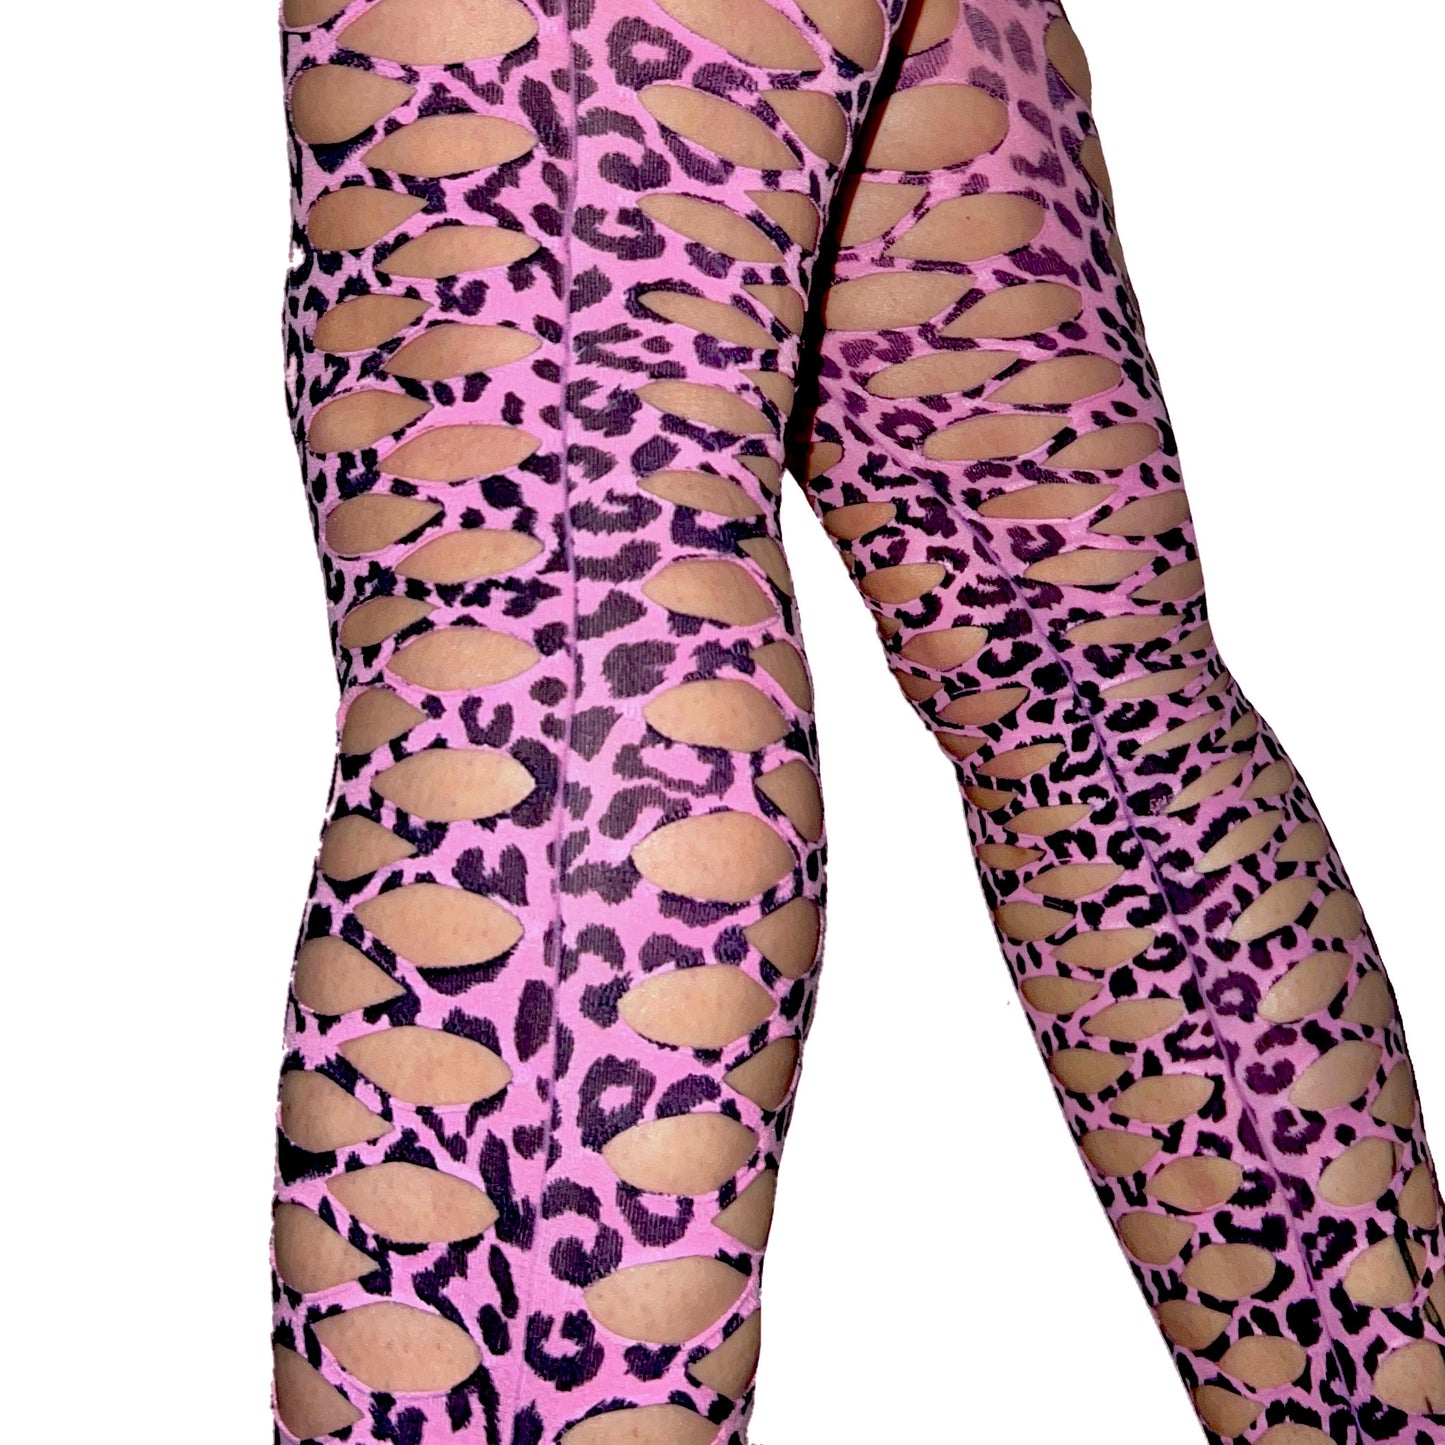 Thigh High Stockings: Pink n' Black Leopard